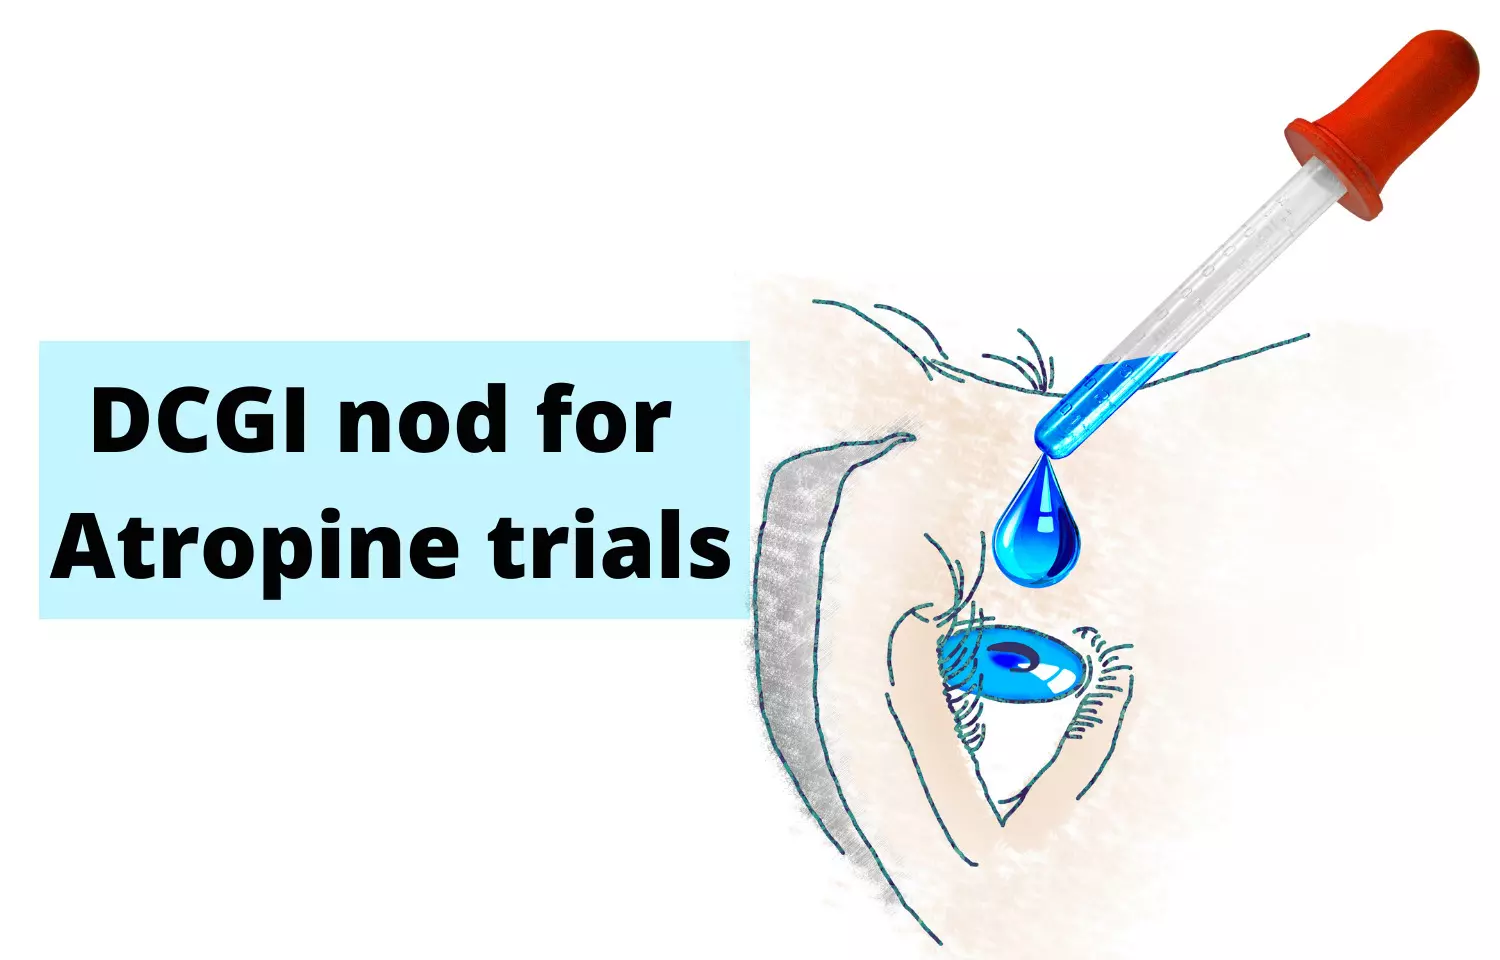 Entod Pharma gets DCGI nod for phase 3 trials of Atropine eye drops